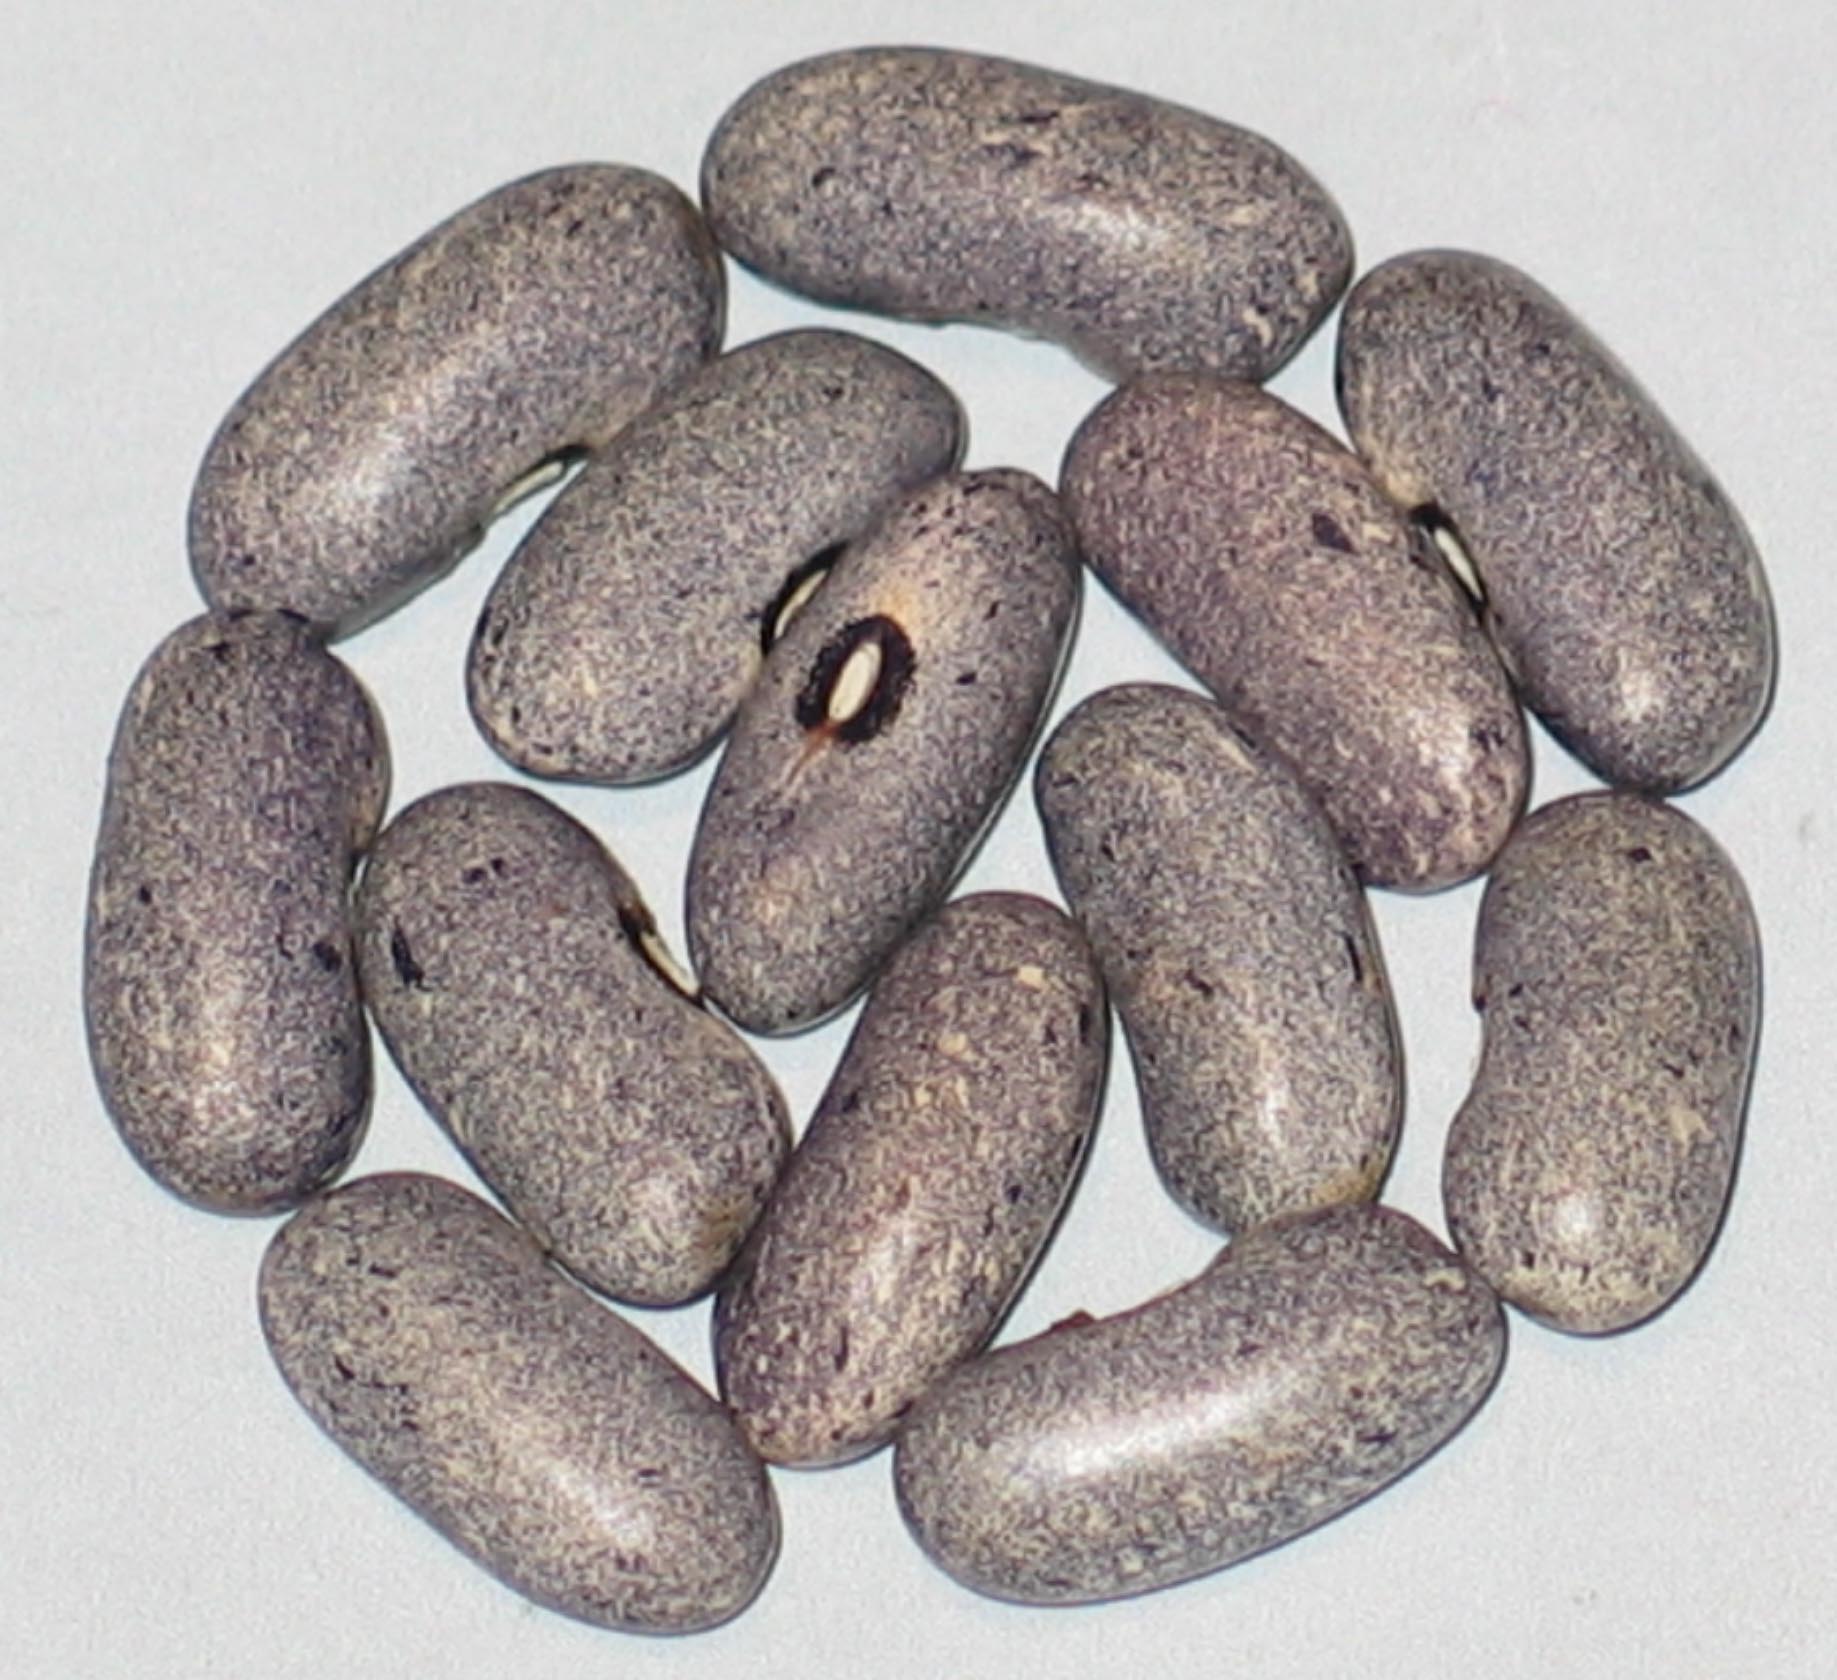 image of Giant Nilgiri beans